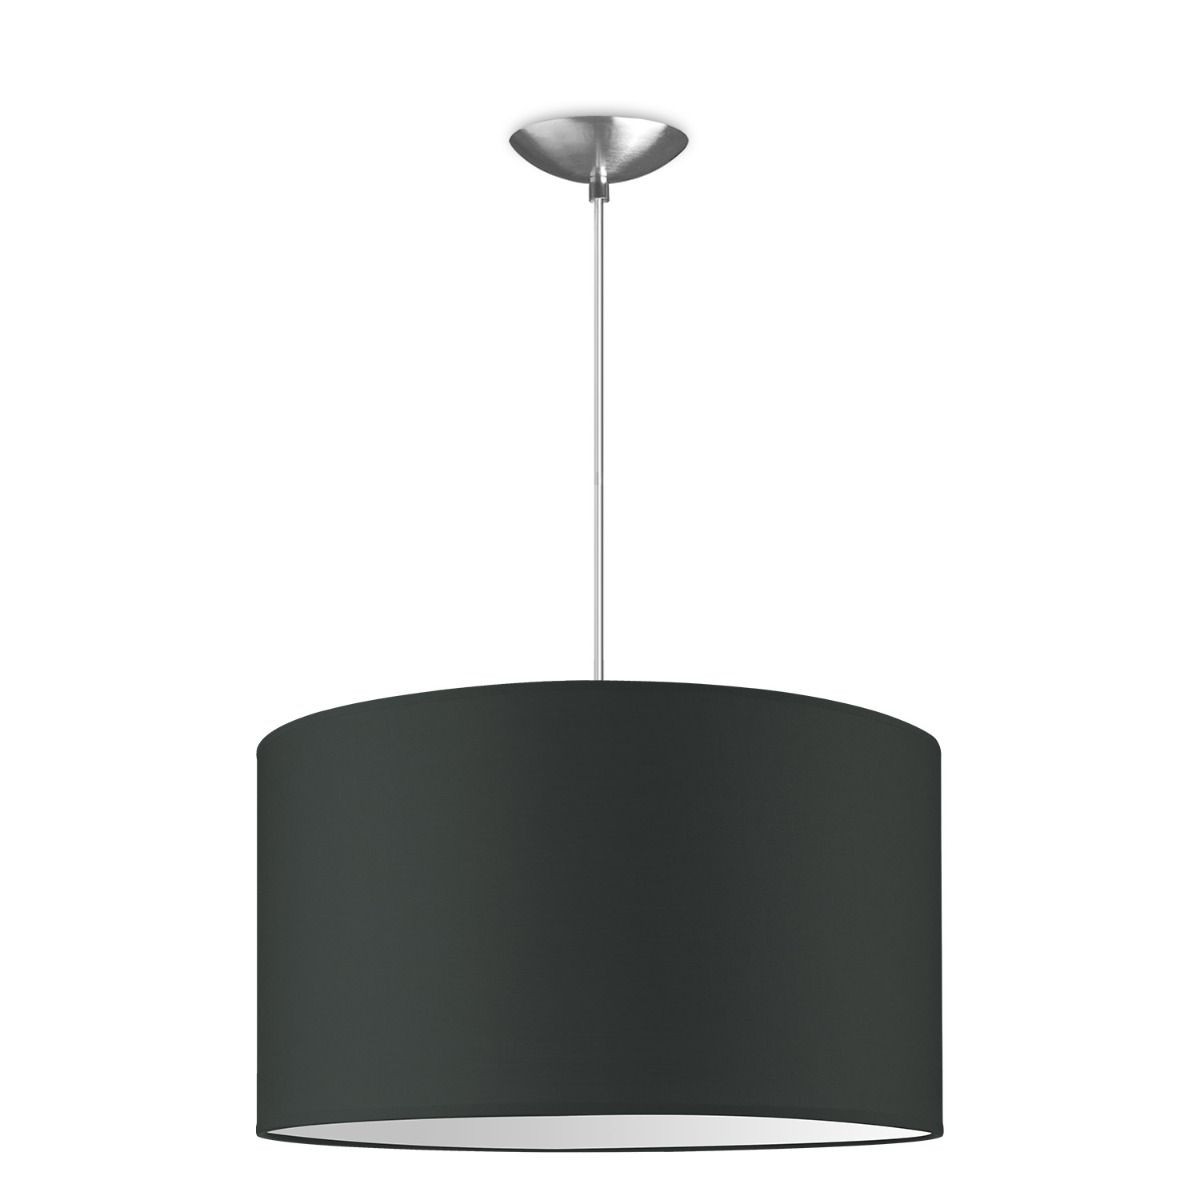 Light depot - hanglamp basic bling Ø 40 cm - antraciet - Outlet